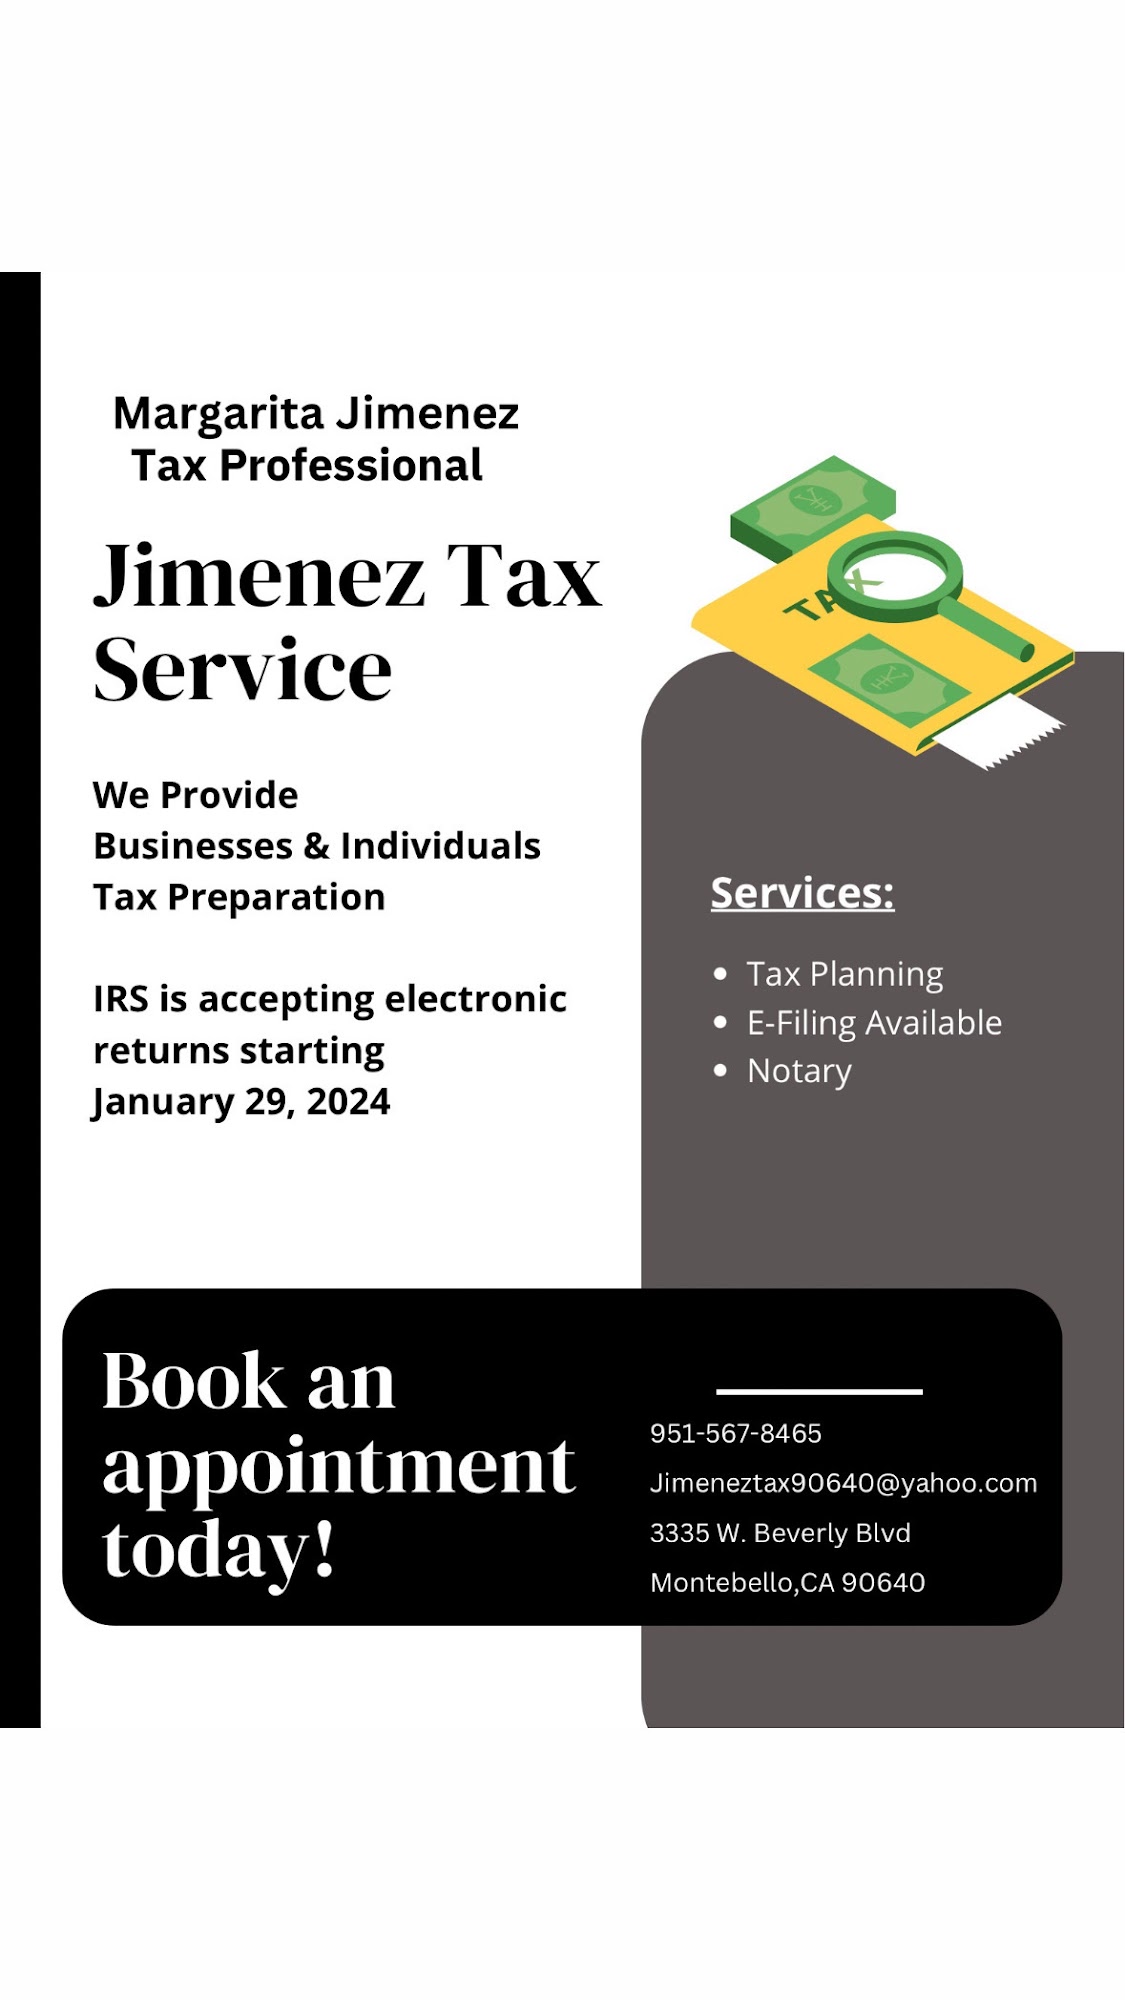 Jimenez Tax Services